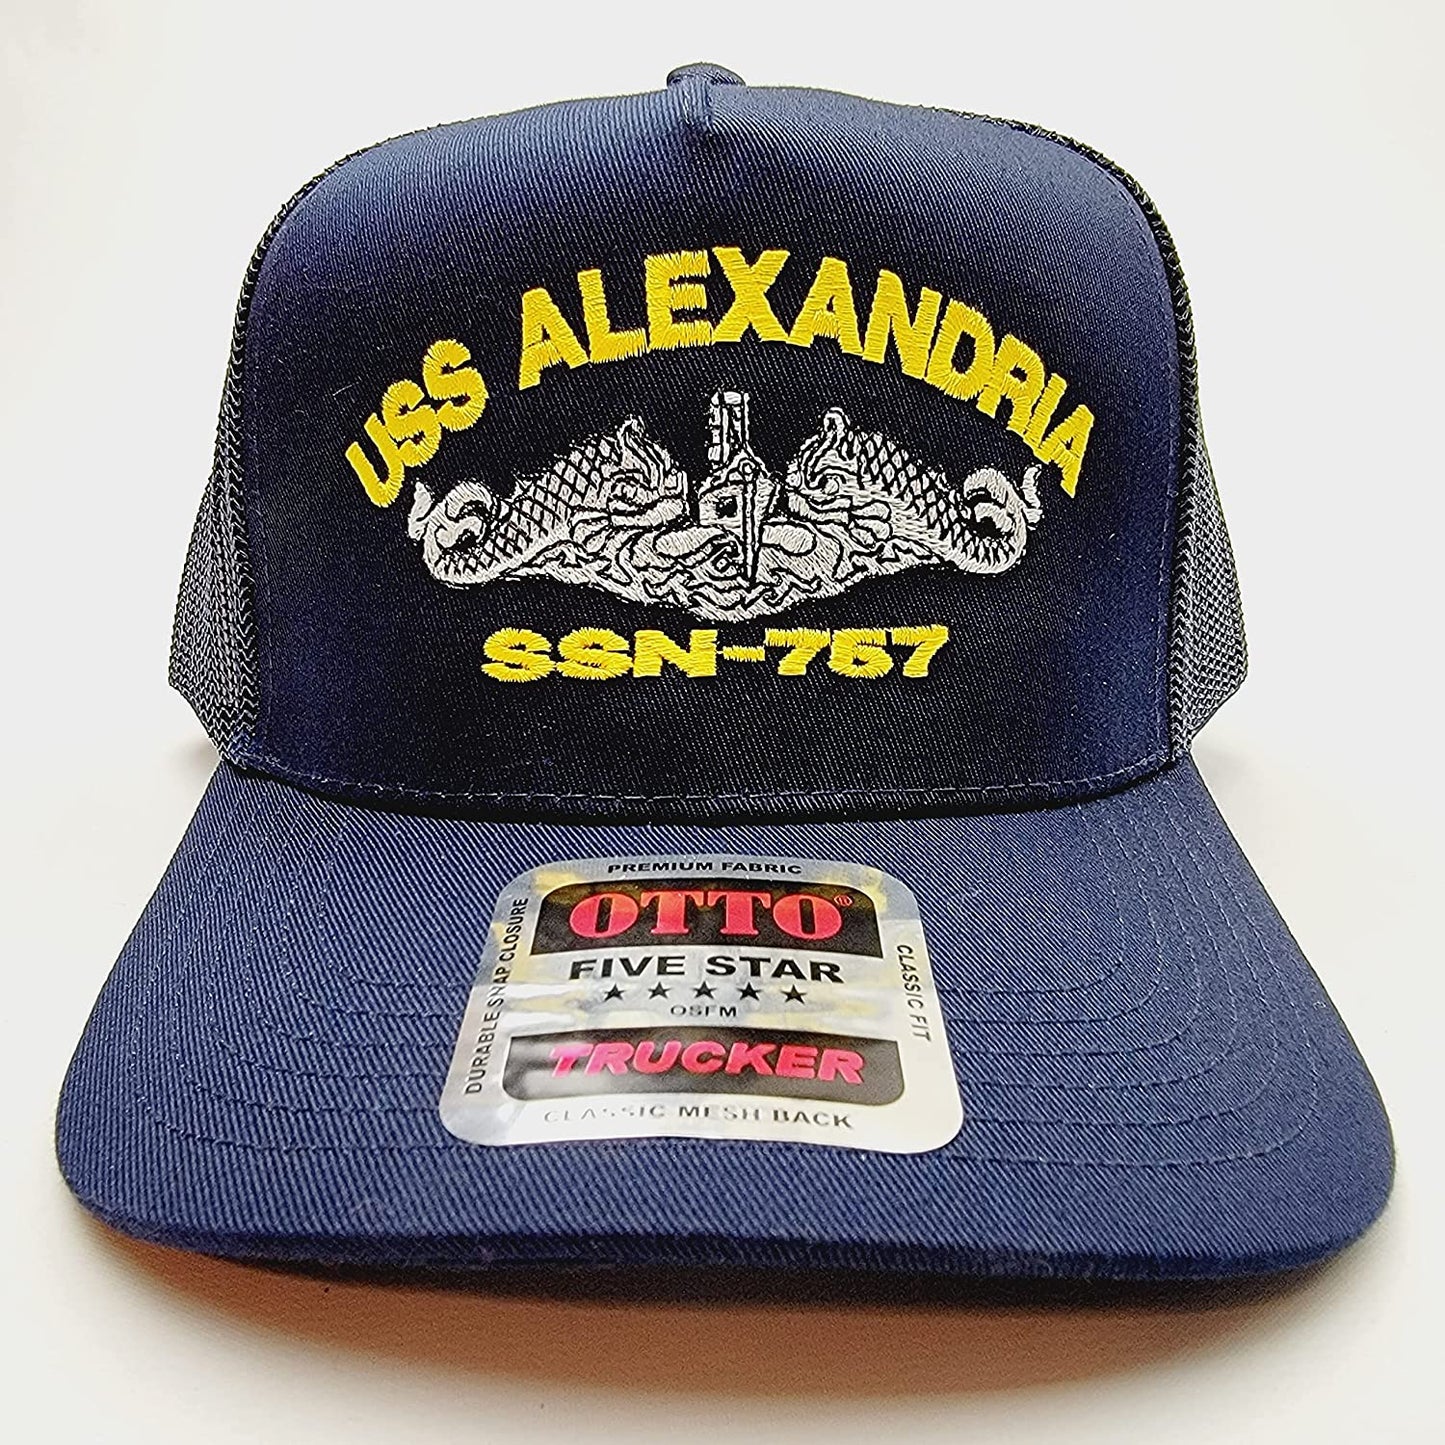 US NAVY USS ALEXANDRIA SSN-757 Embroidered Hat Baseball Cap Adjustable Blue